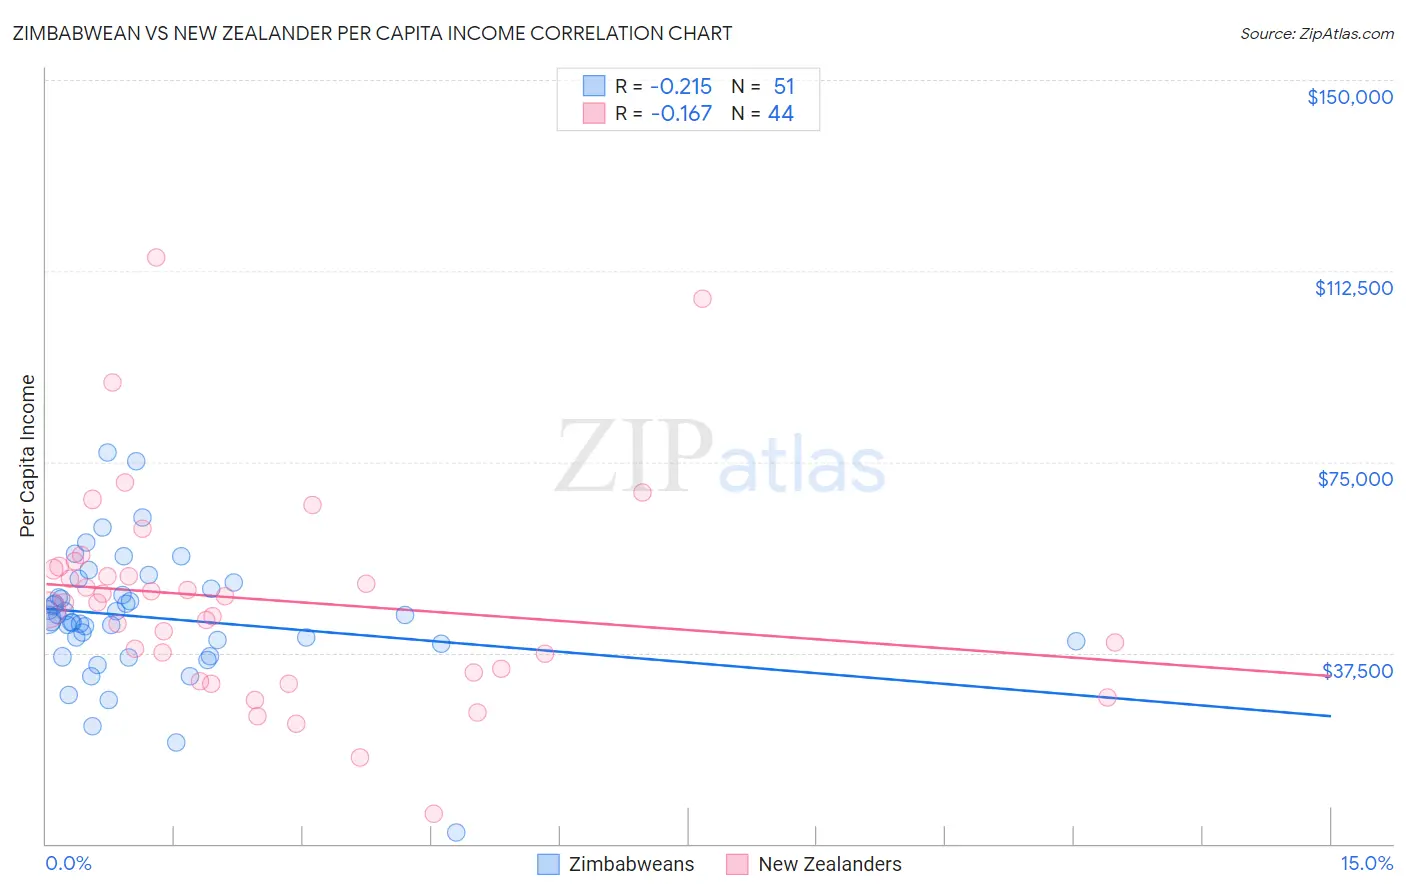 Zimbabwean vs New Zealander Per Capita Income